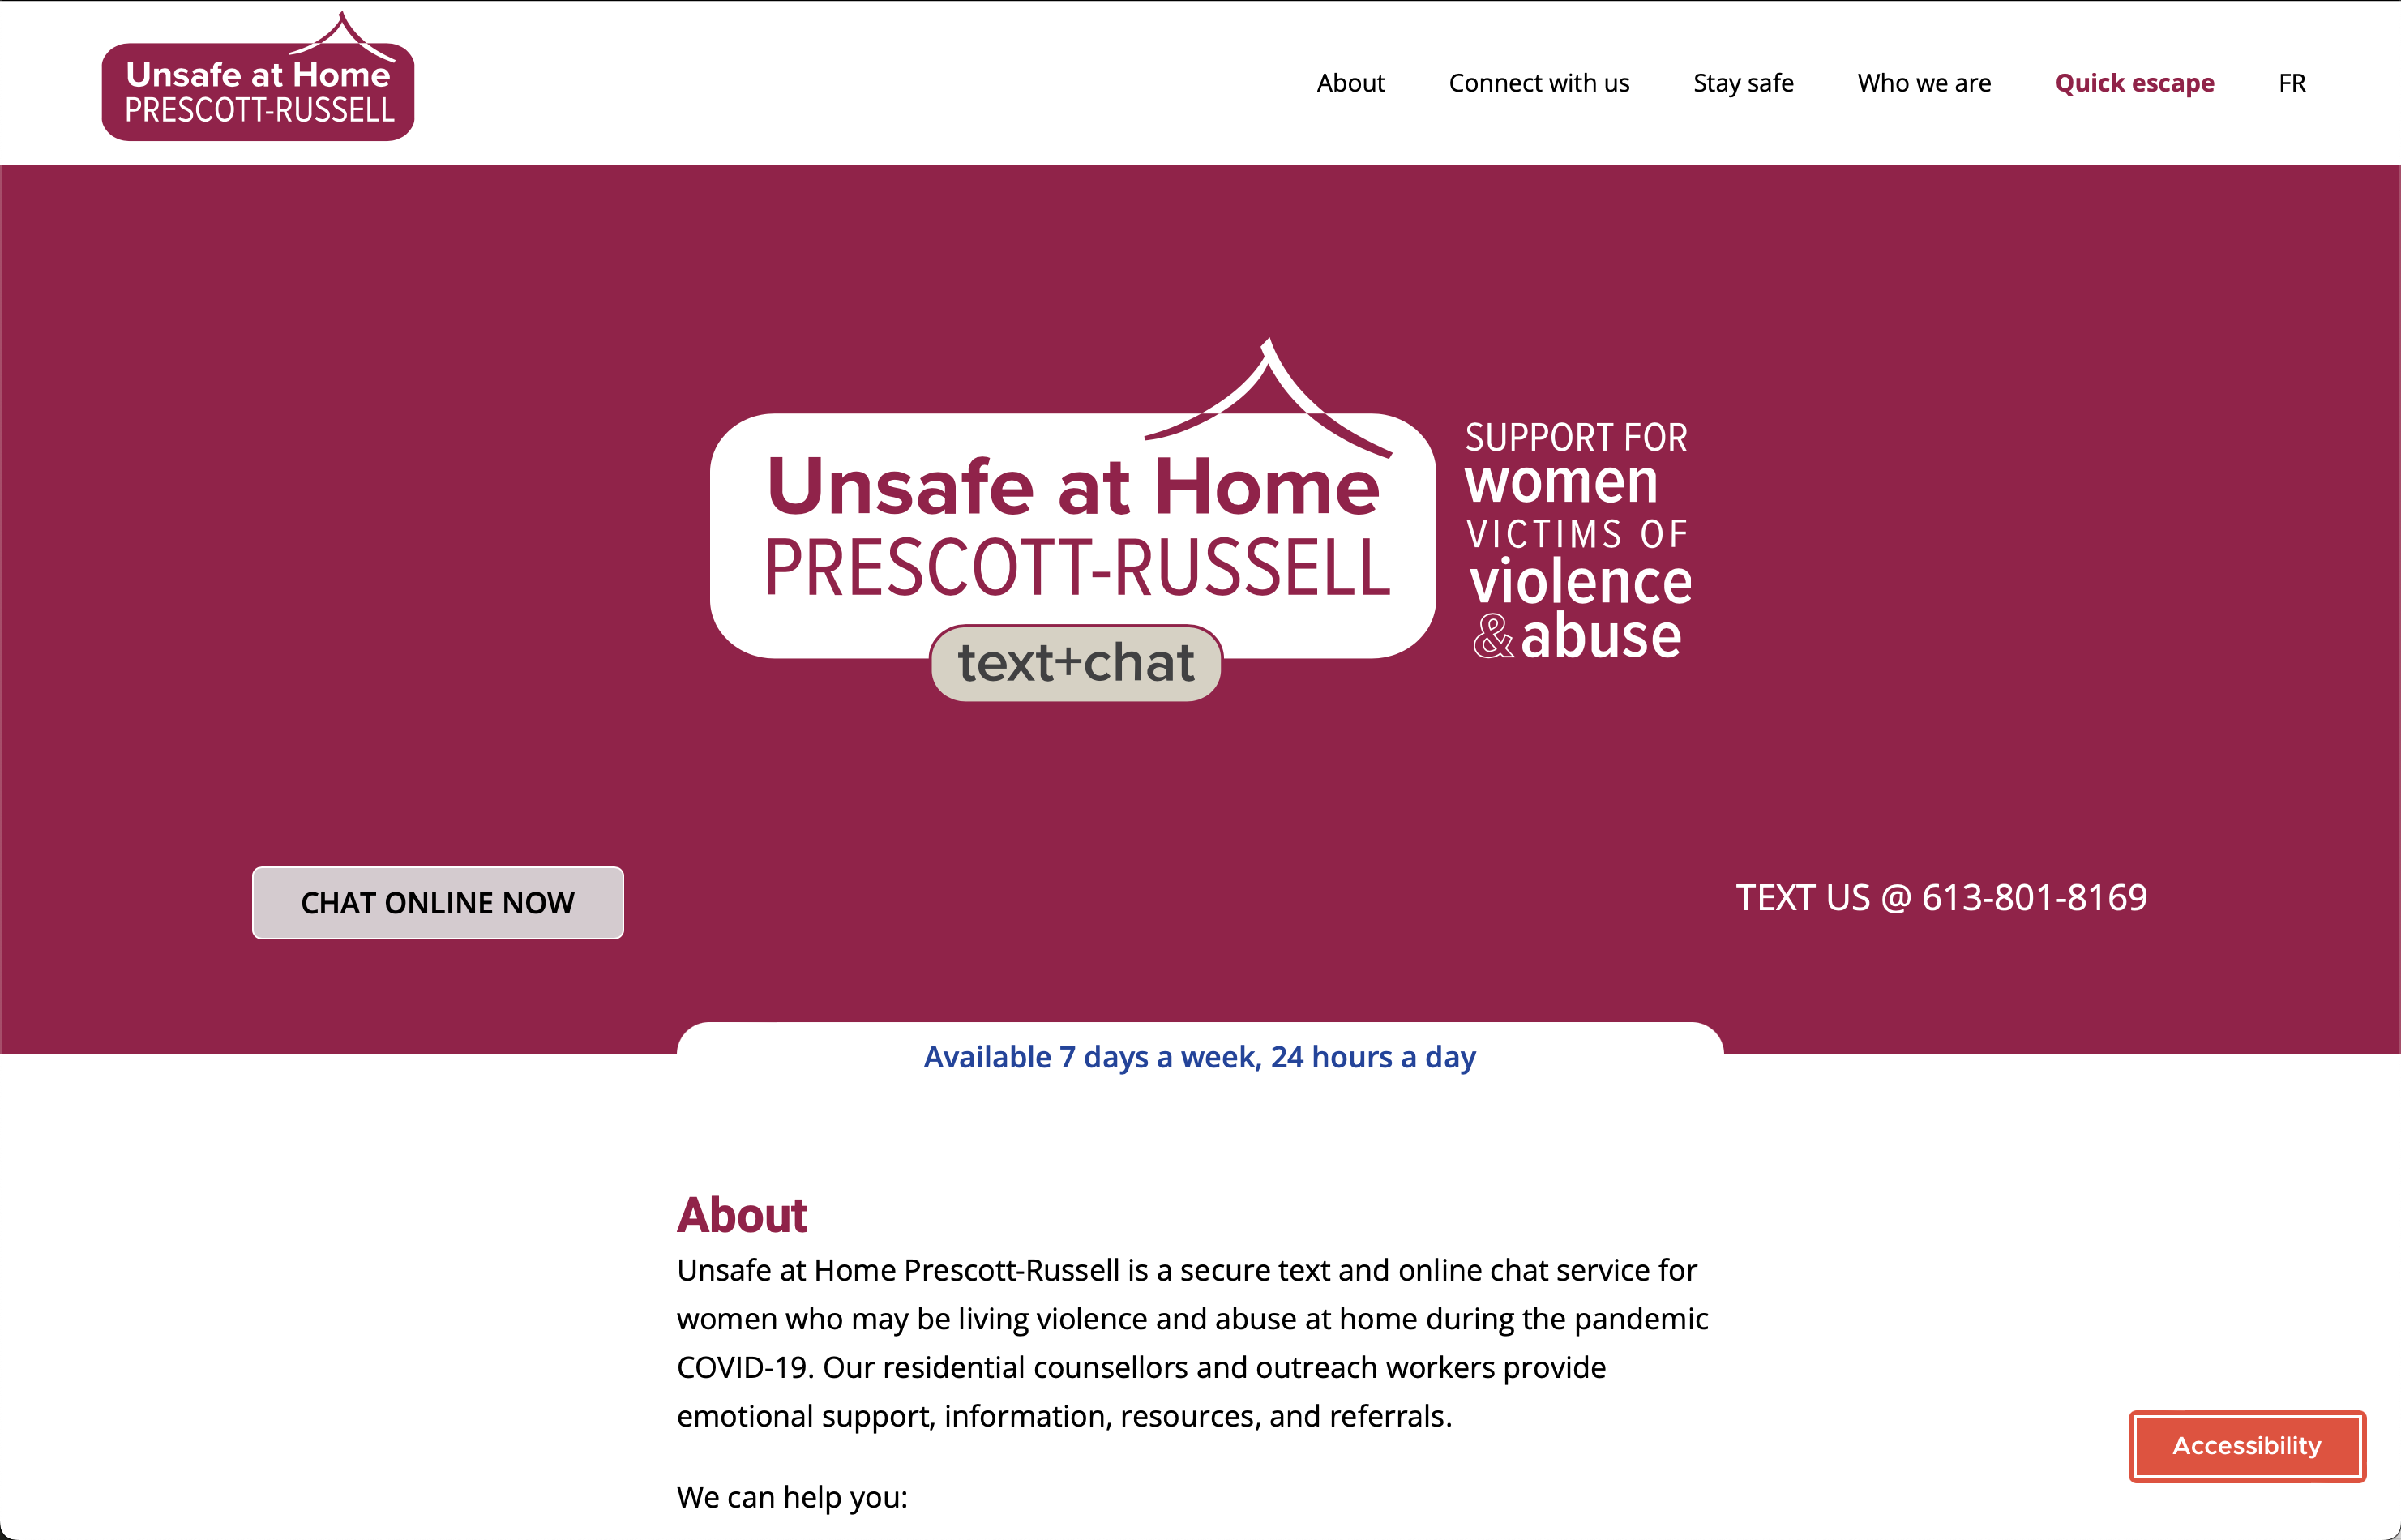 Unsafe at home website capture